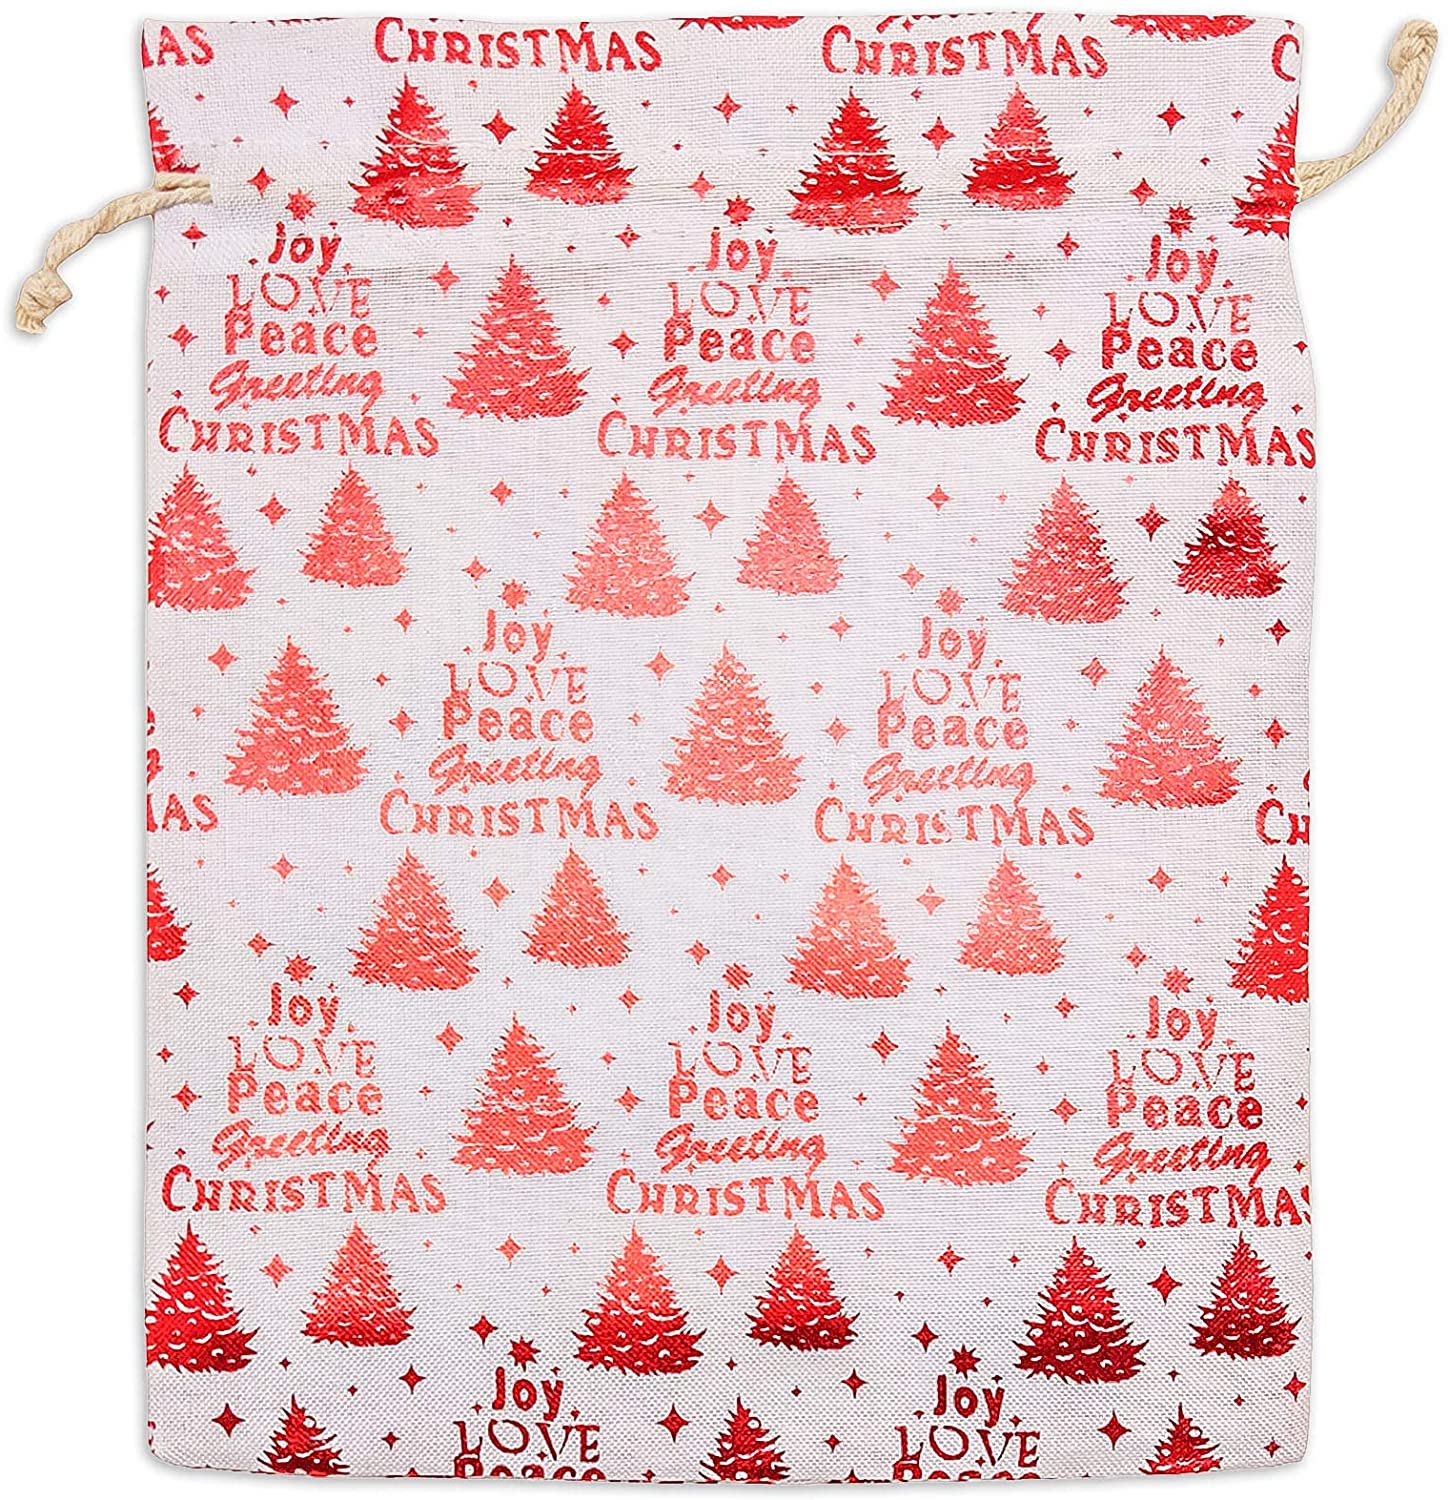 8" x 10" Cotton Muslin Red Christmas Tree Drawstring Gift Bags